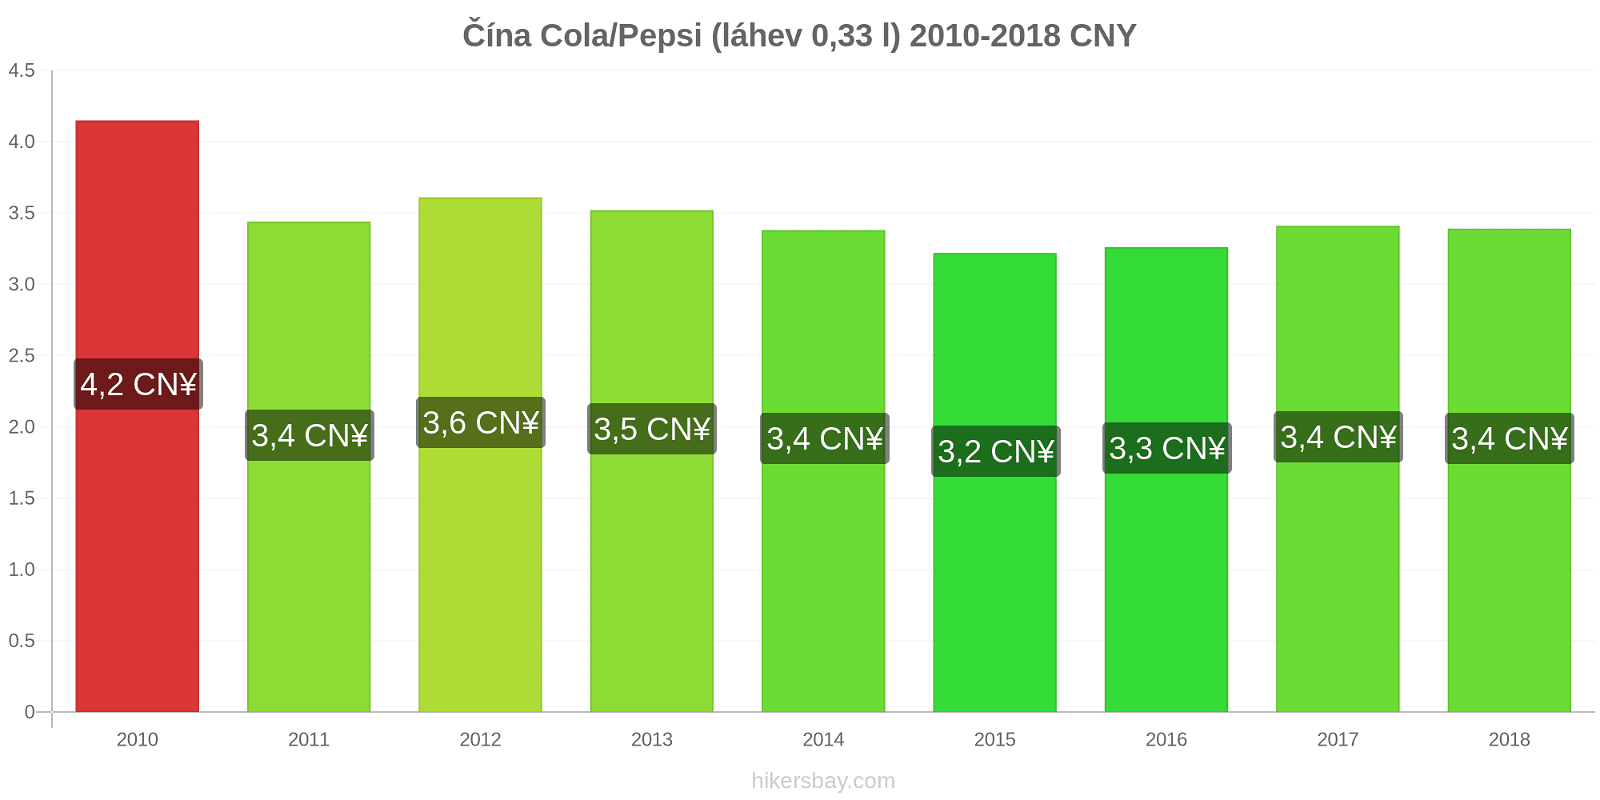 Čína změny cen Coca-Cola/Pepsi (láhev 0.33 l) hikersbay.com